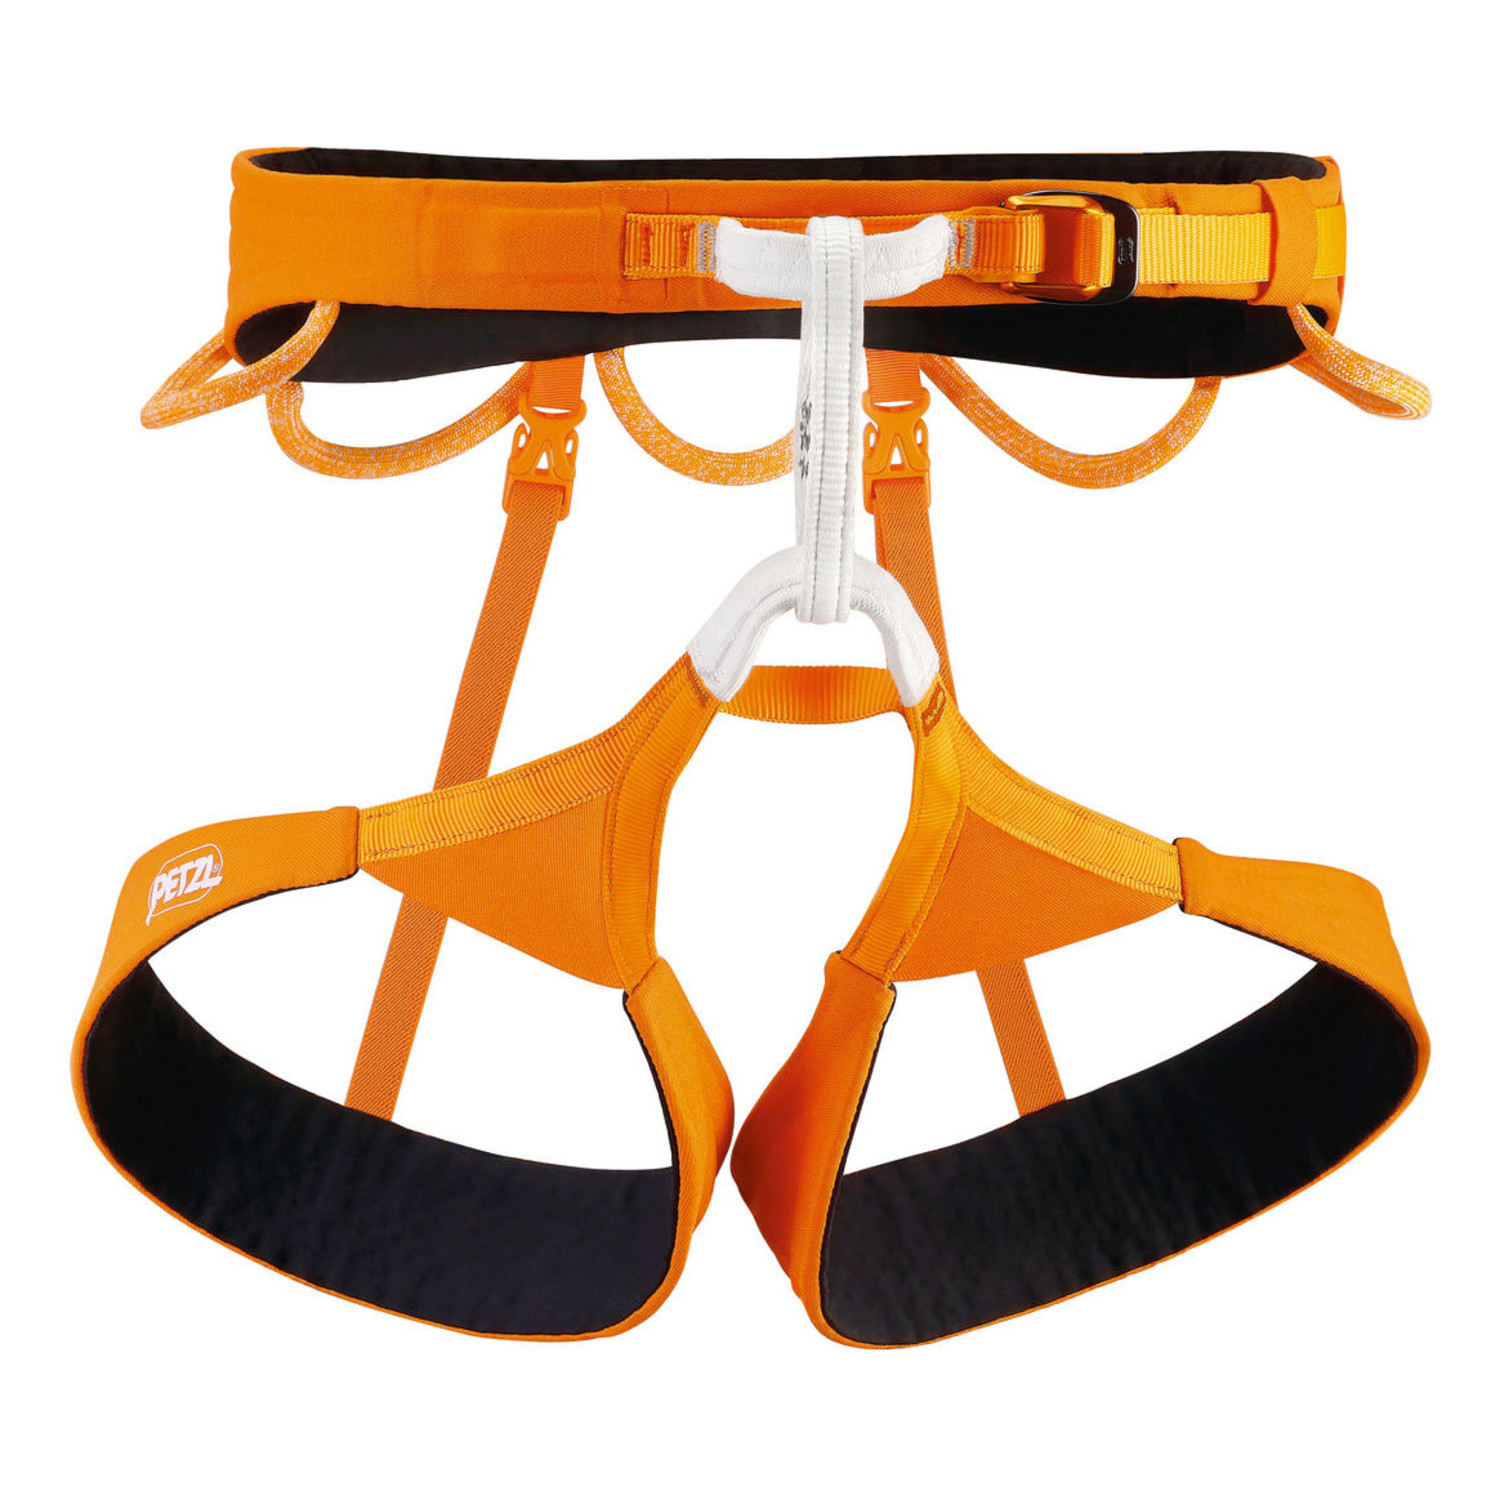 Petzl Hirundos Harness Orange - S